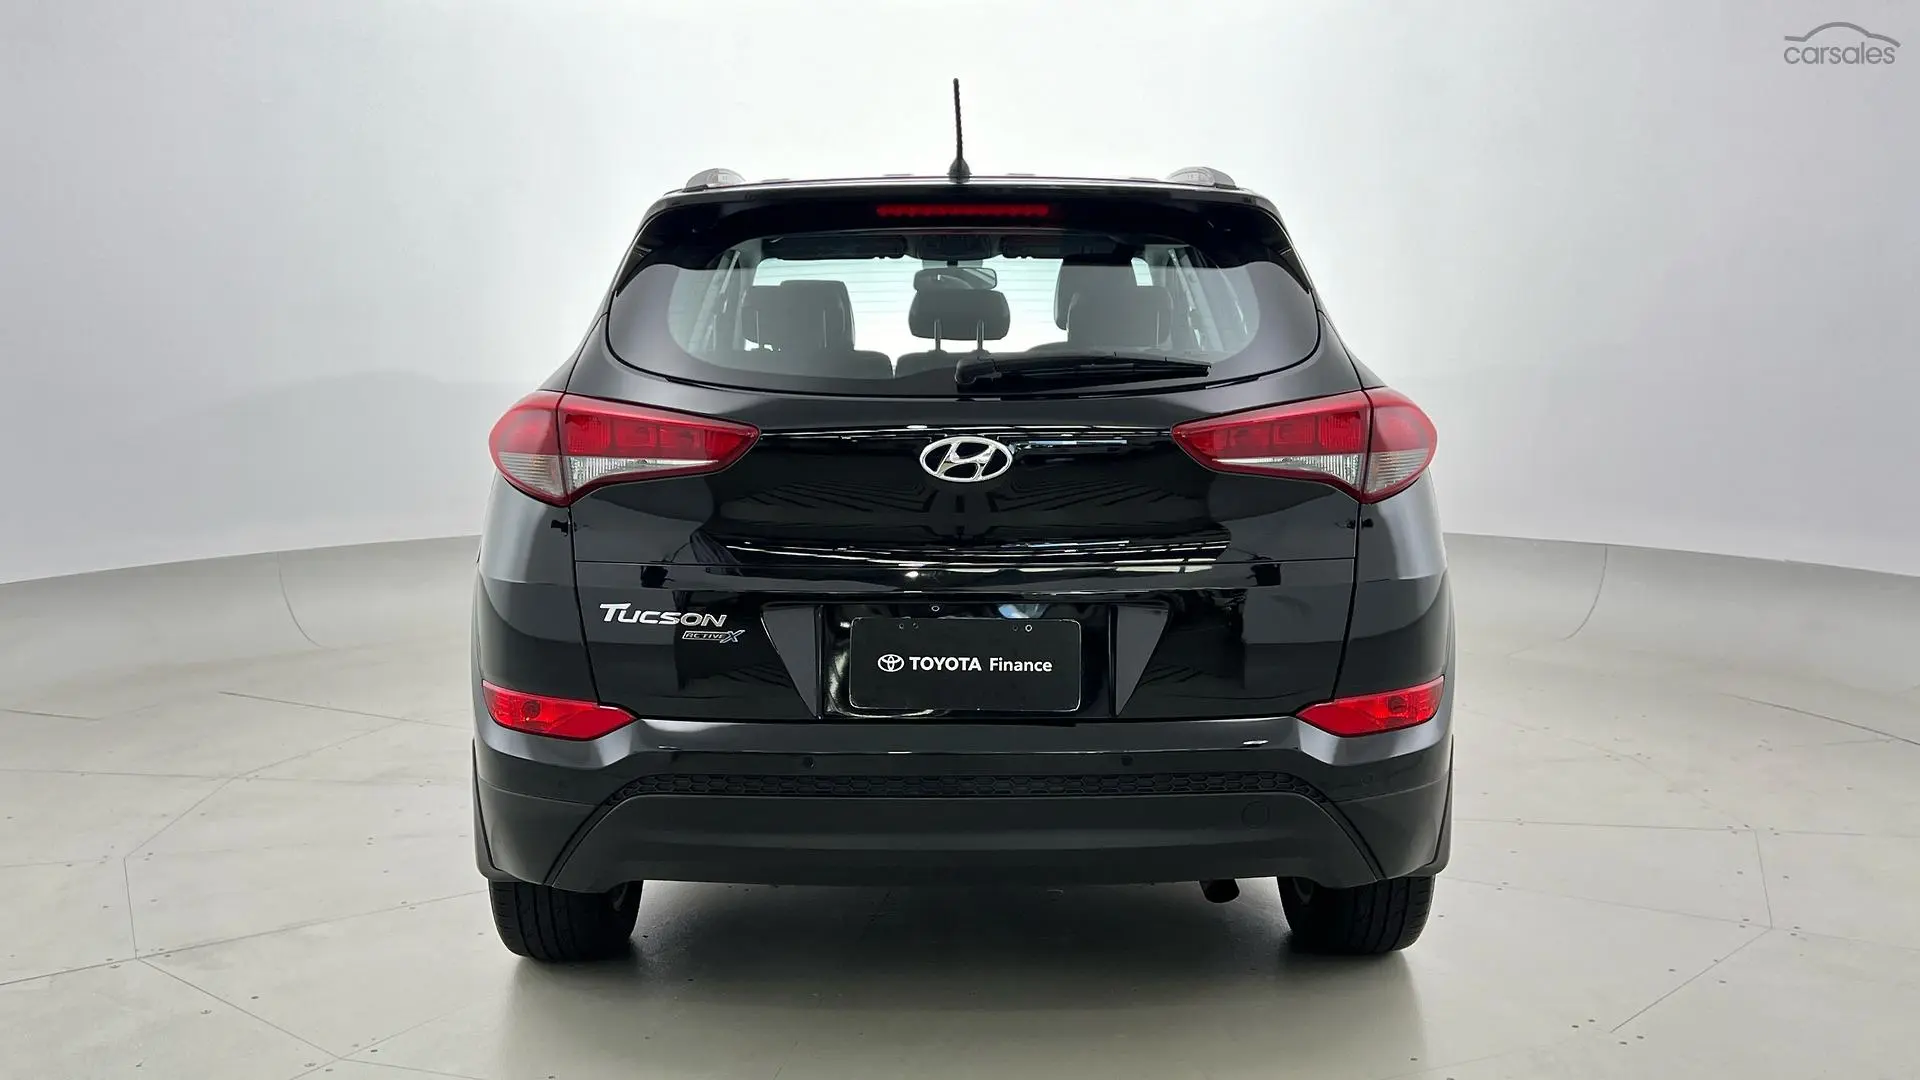 2017 Hyundai Tucson Image 6